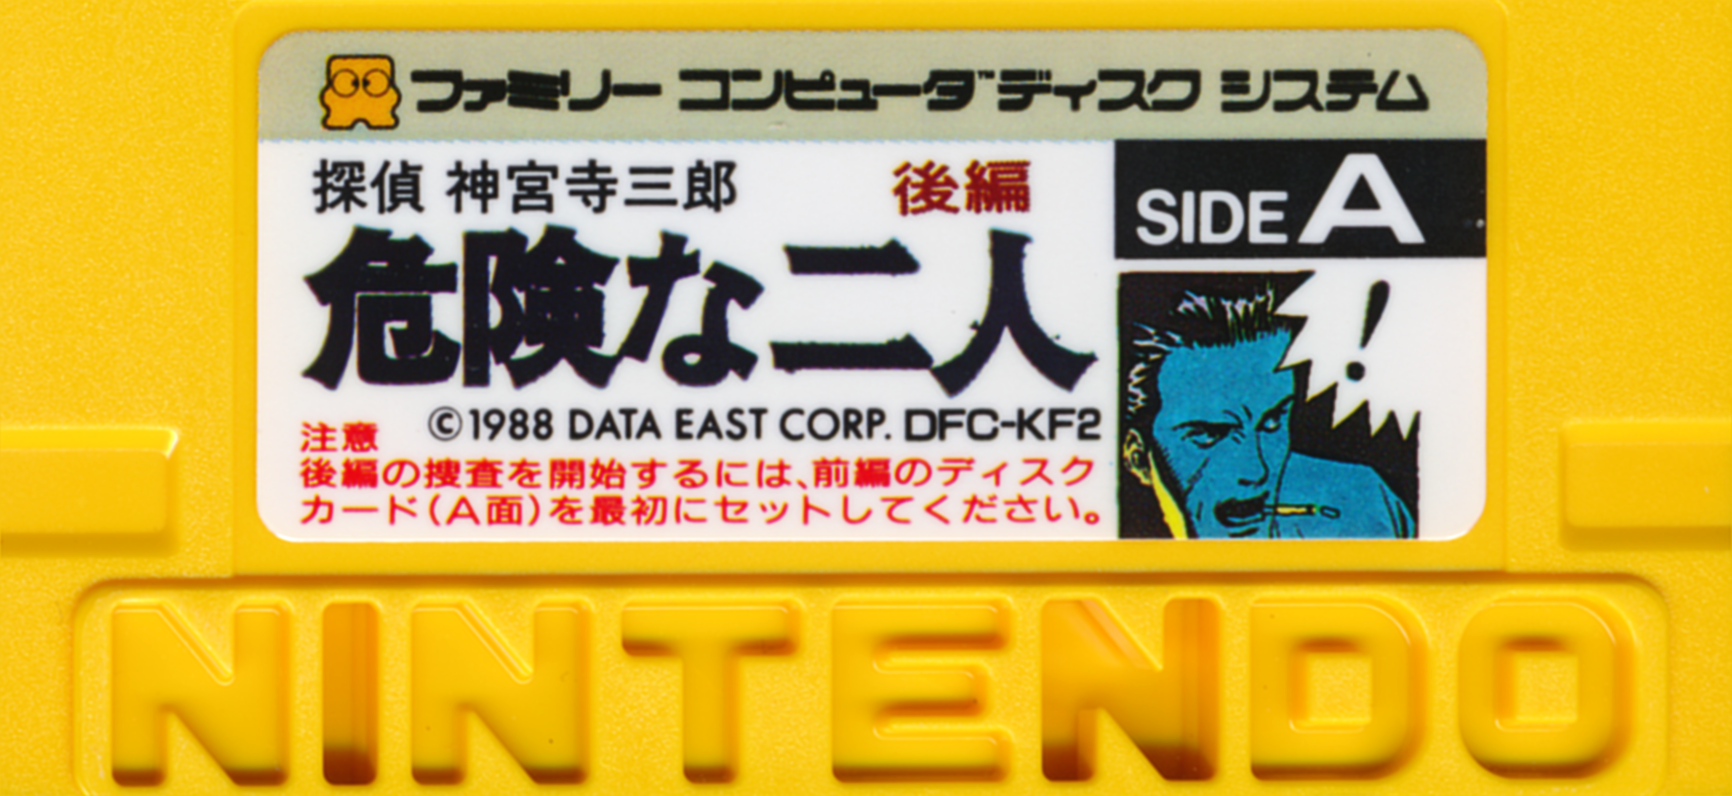 Fuuto Tantei Blu-Ray Box Joukan : Futo PI  HMV&BOOKS online : Online  Shopping & Information Site - BSTD-20660 [English Site]